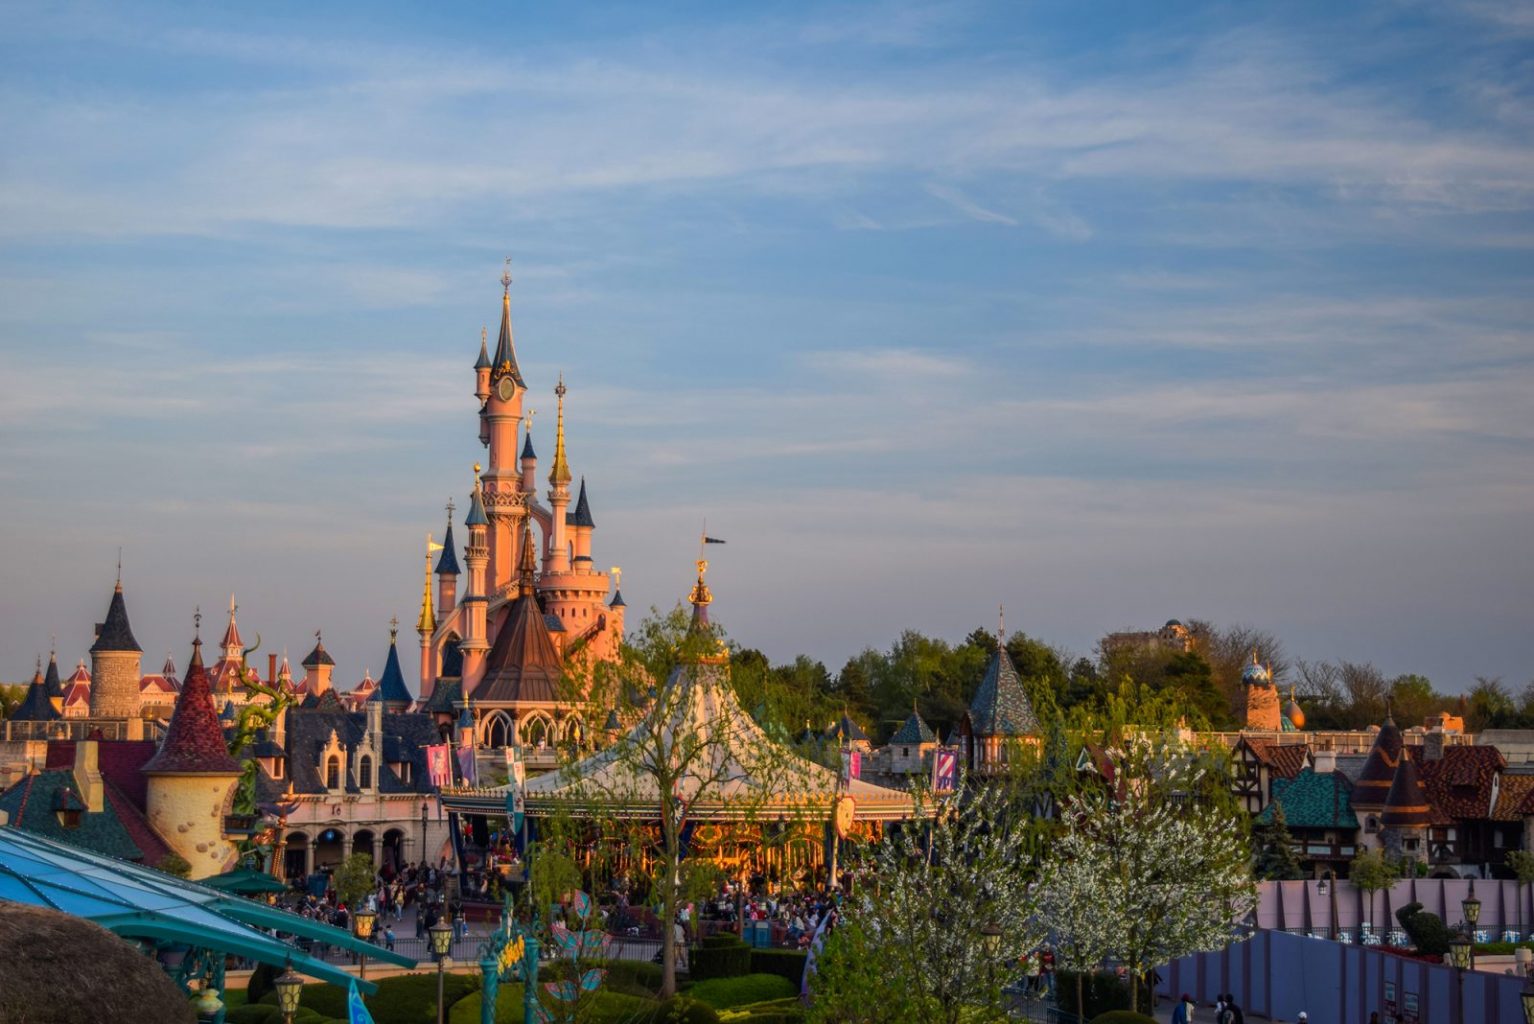 The Disneyland Paris skyline featuring the castle